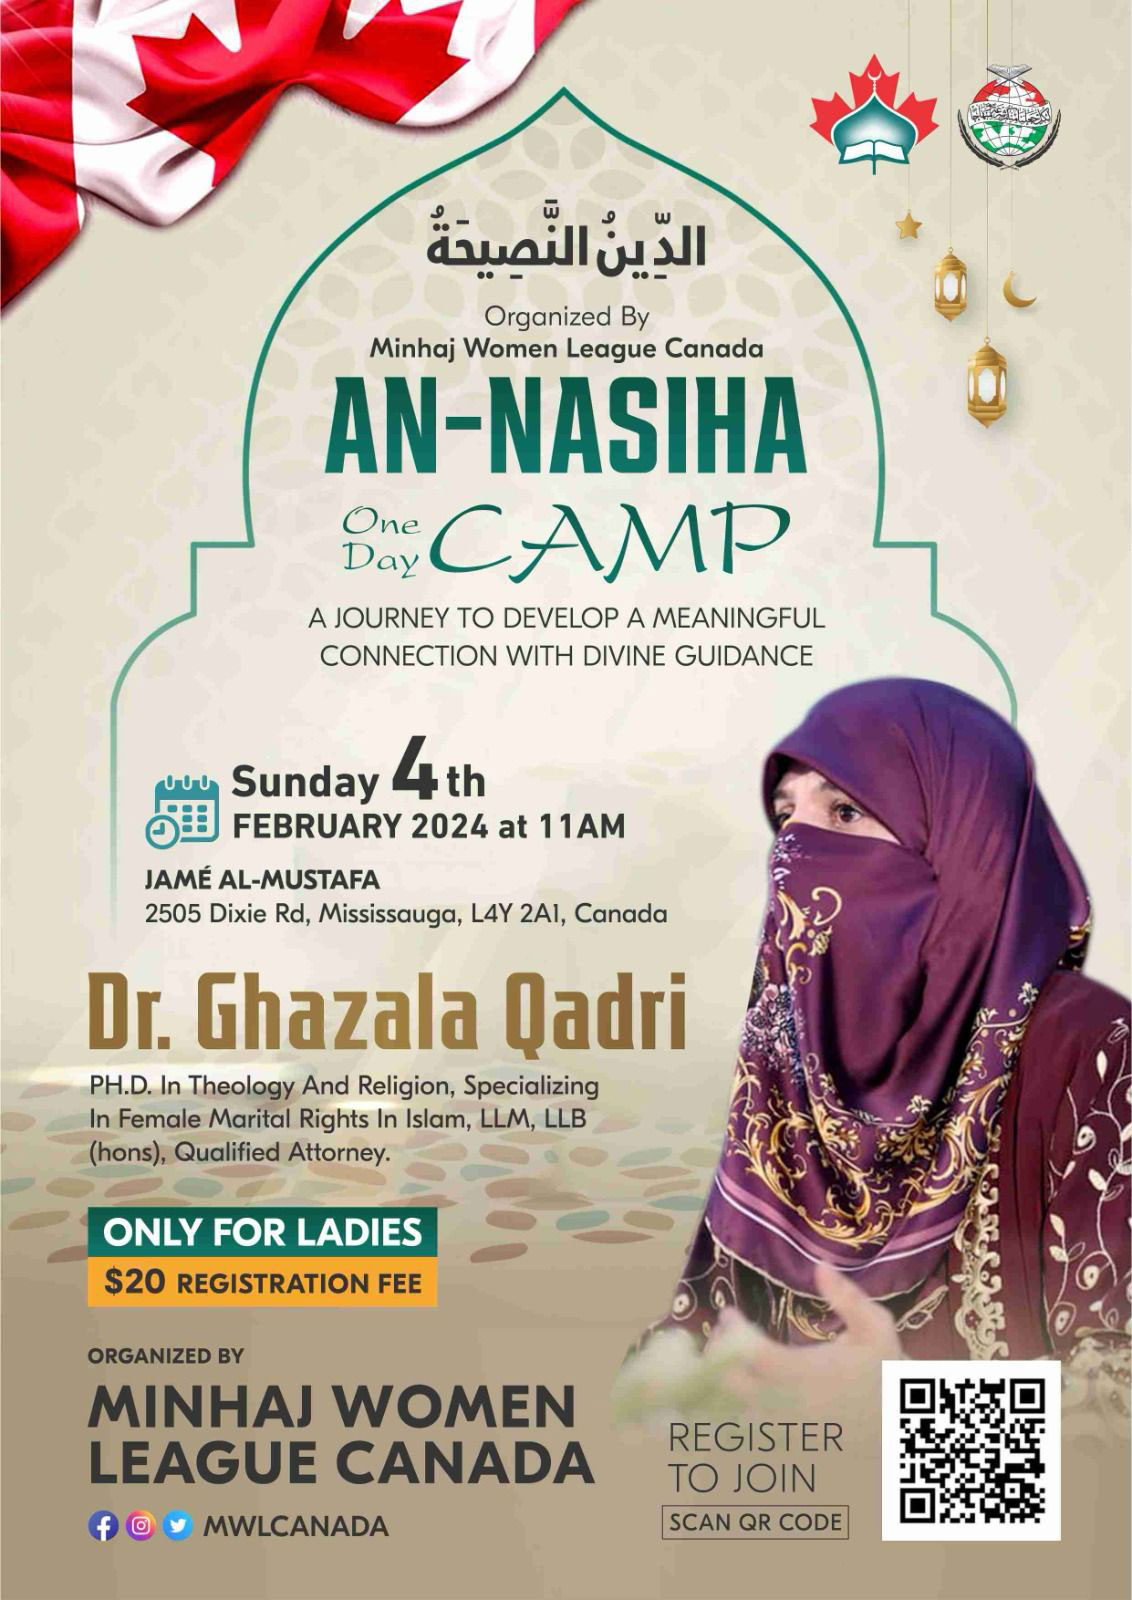 MWL Canada Presents An Nasiha Camp with Dr Ghazala Qadri